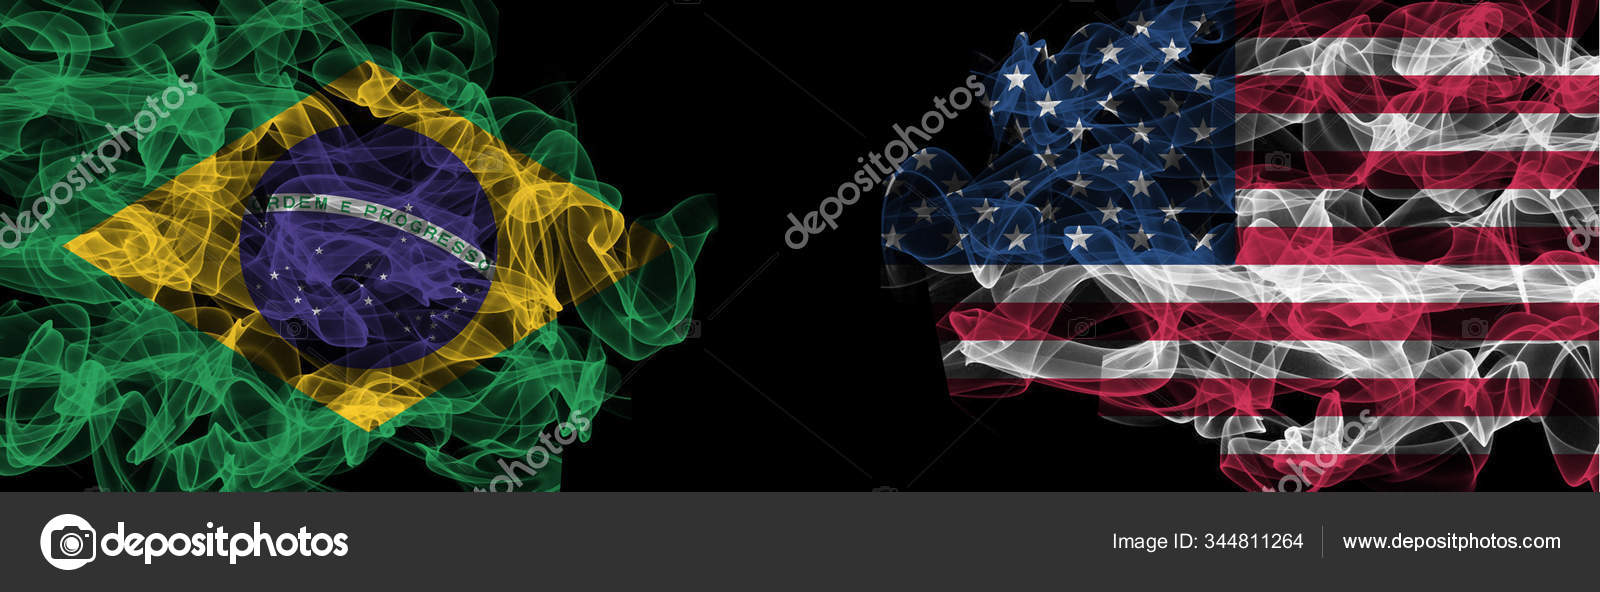 https://st3.depositphotos.com/5625700/34481/i/1600/depositphotos_344811264-stock-photo-flags-of-brazil-and-usa.jpg